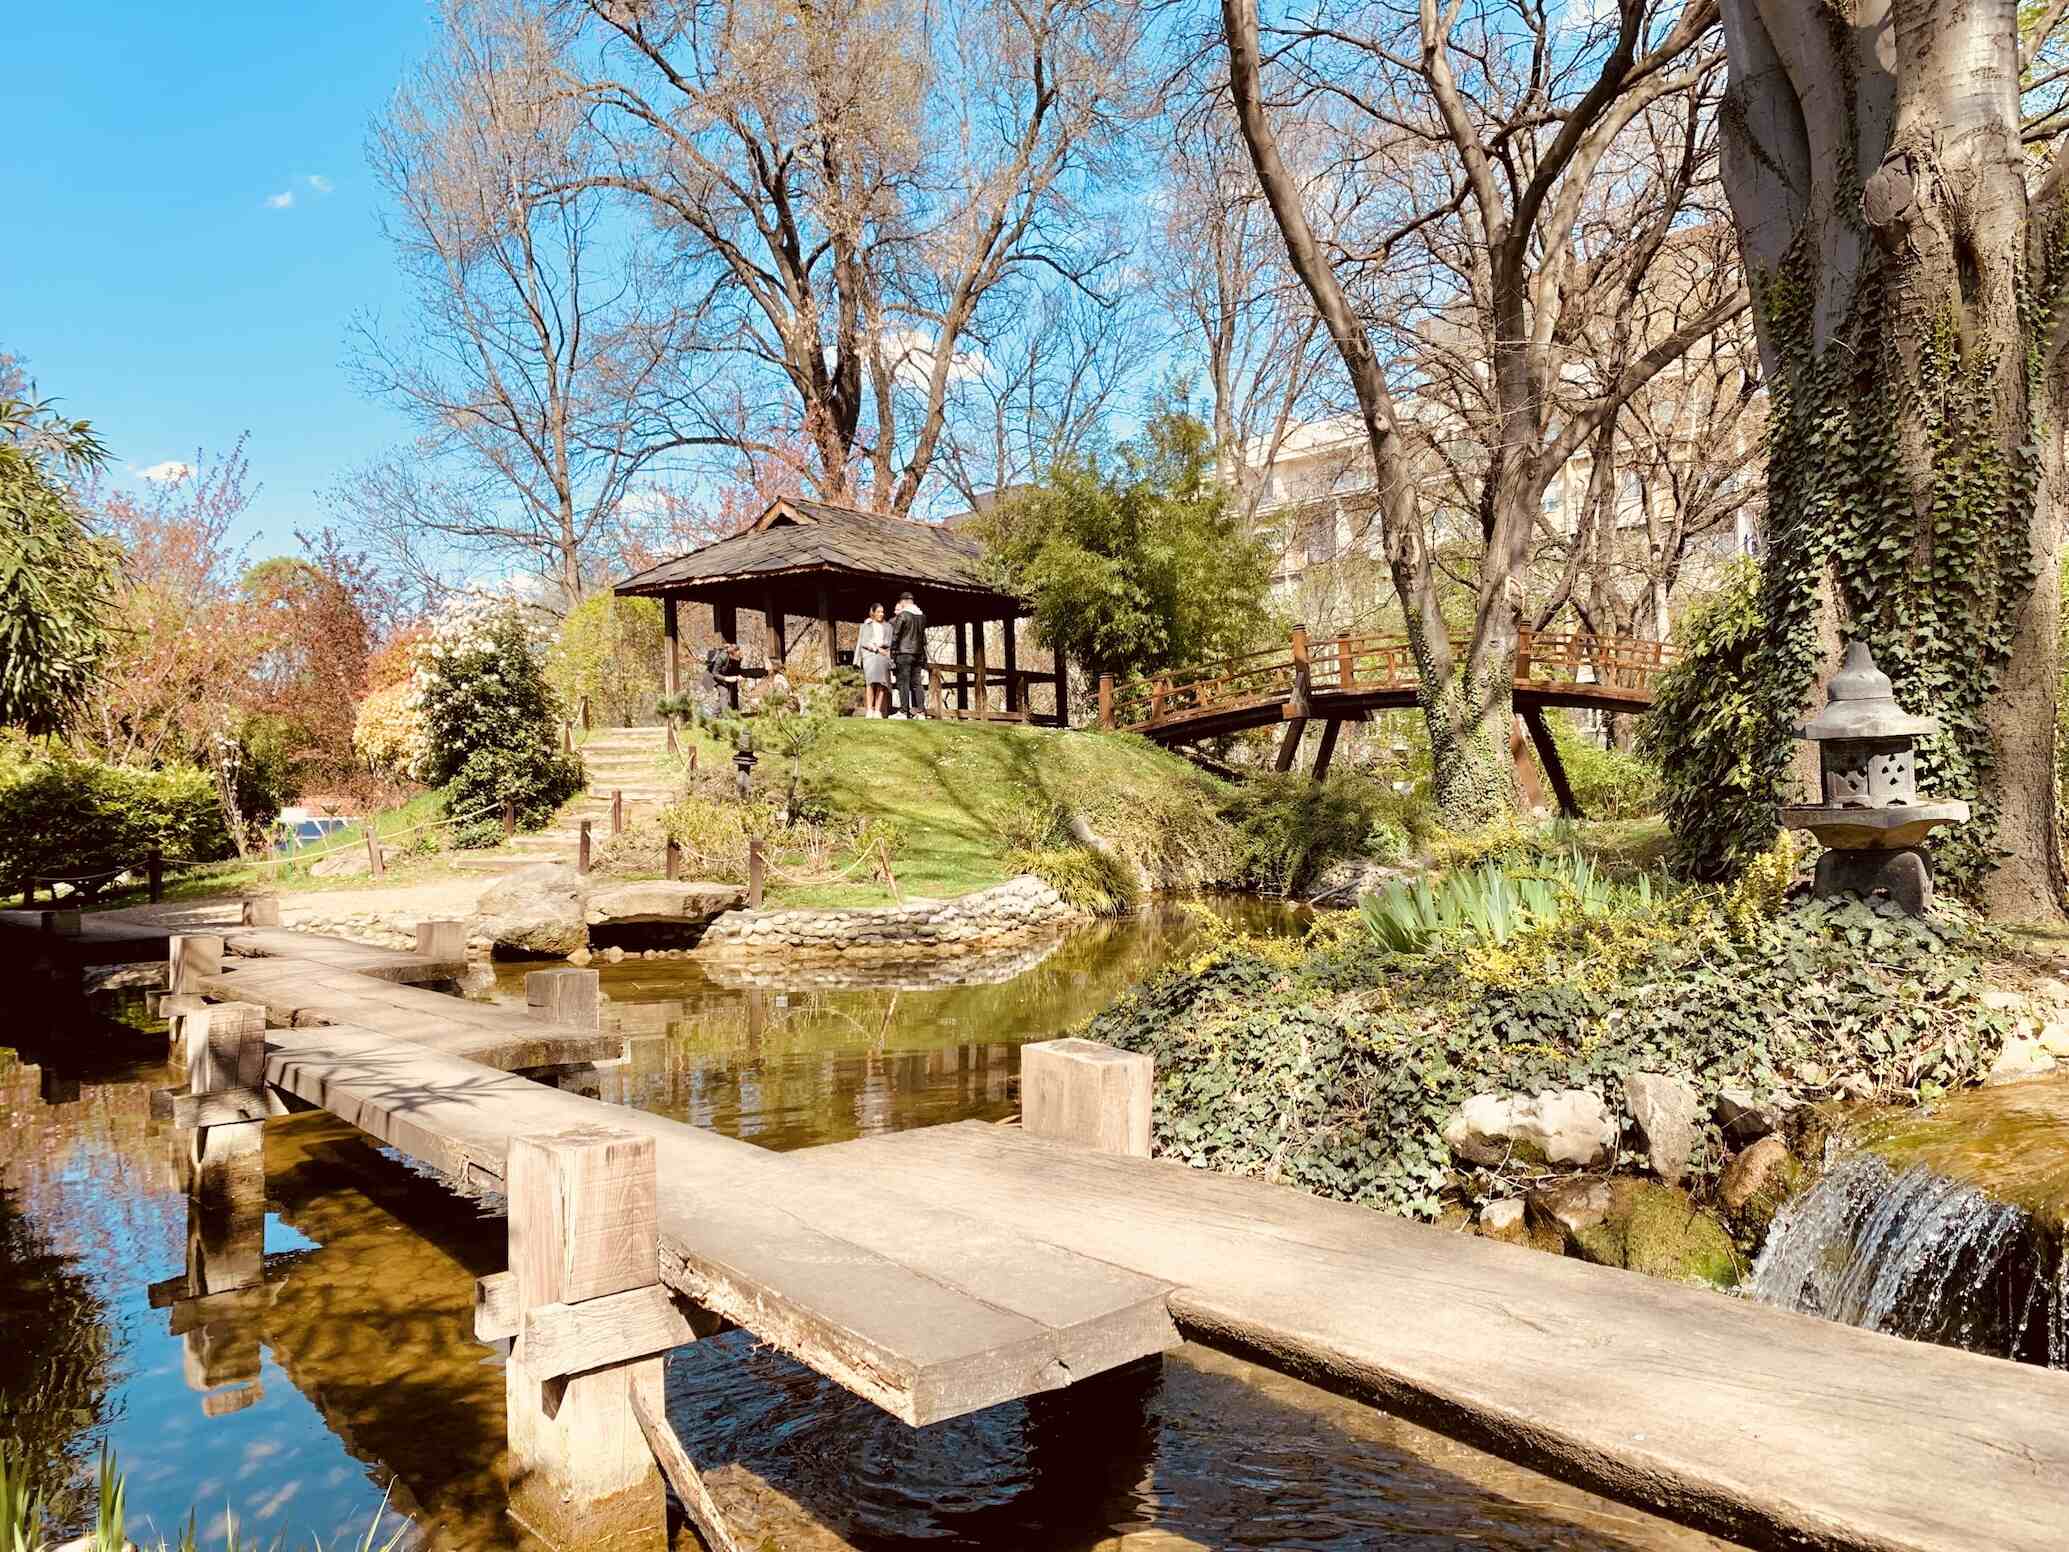 The Japanese Garden at Jevremovac Botanical Garden